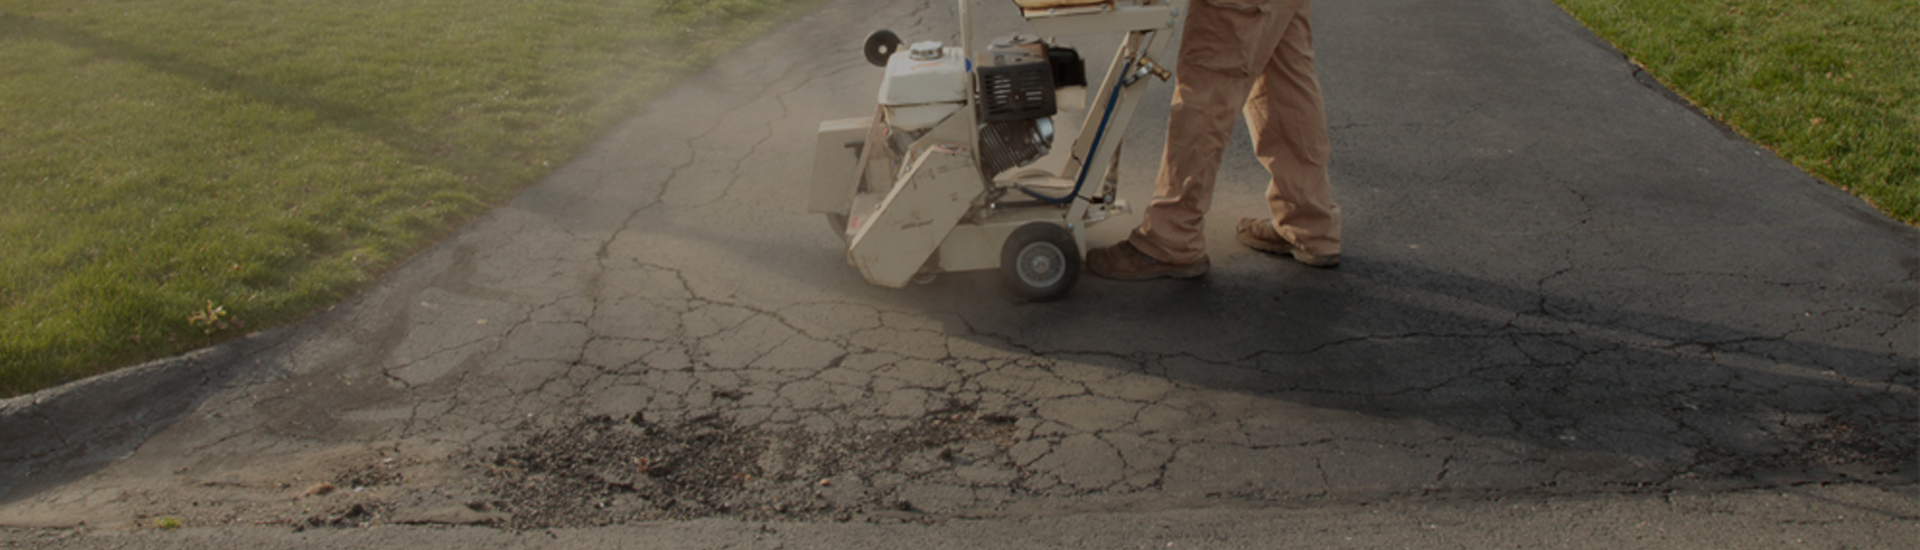 Cutting out damaged asphalt